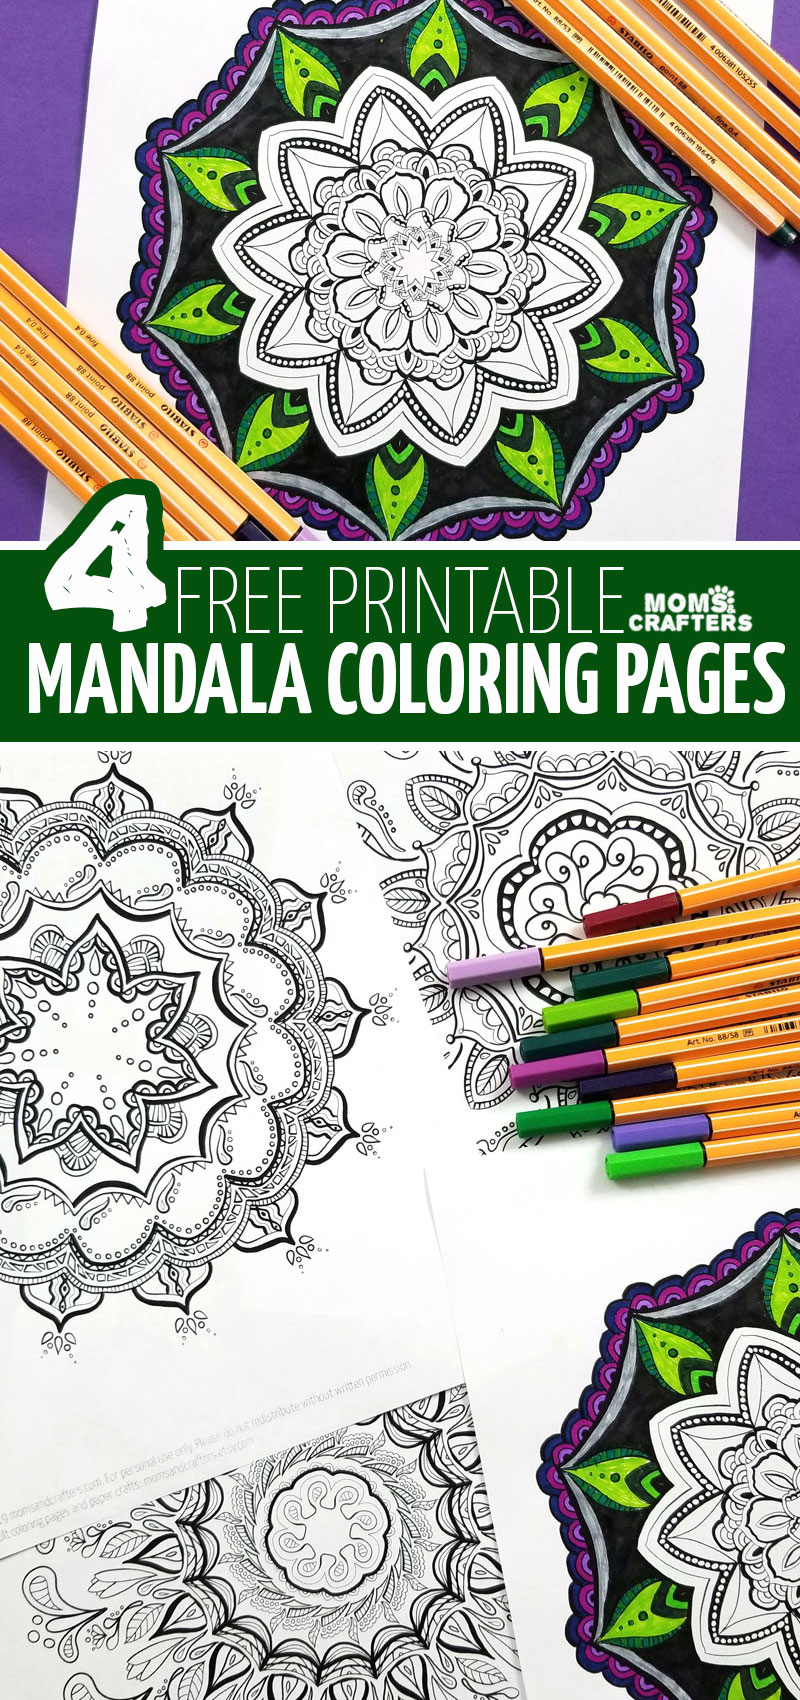  2 Pack Mandalas Relaxing Coloring Books For Adult